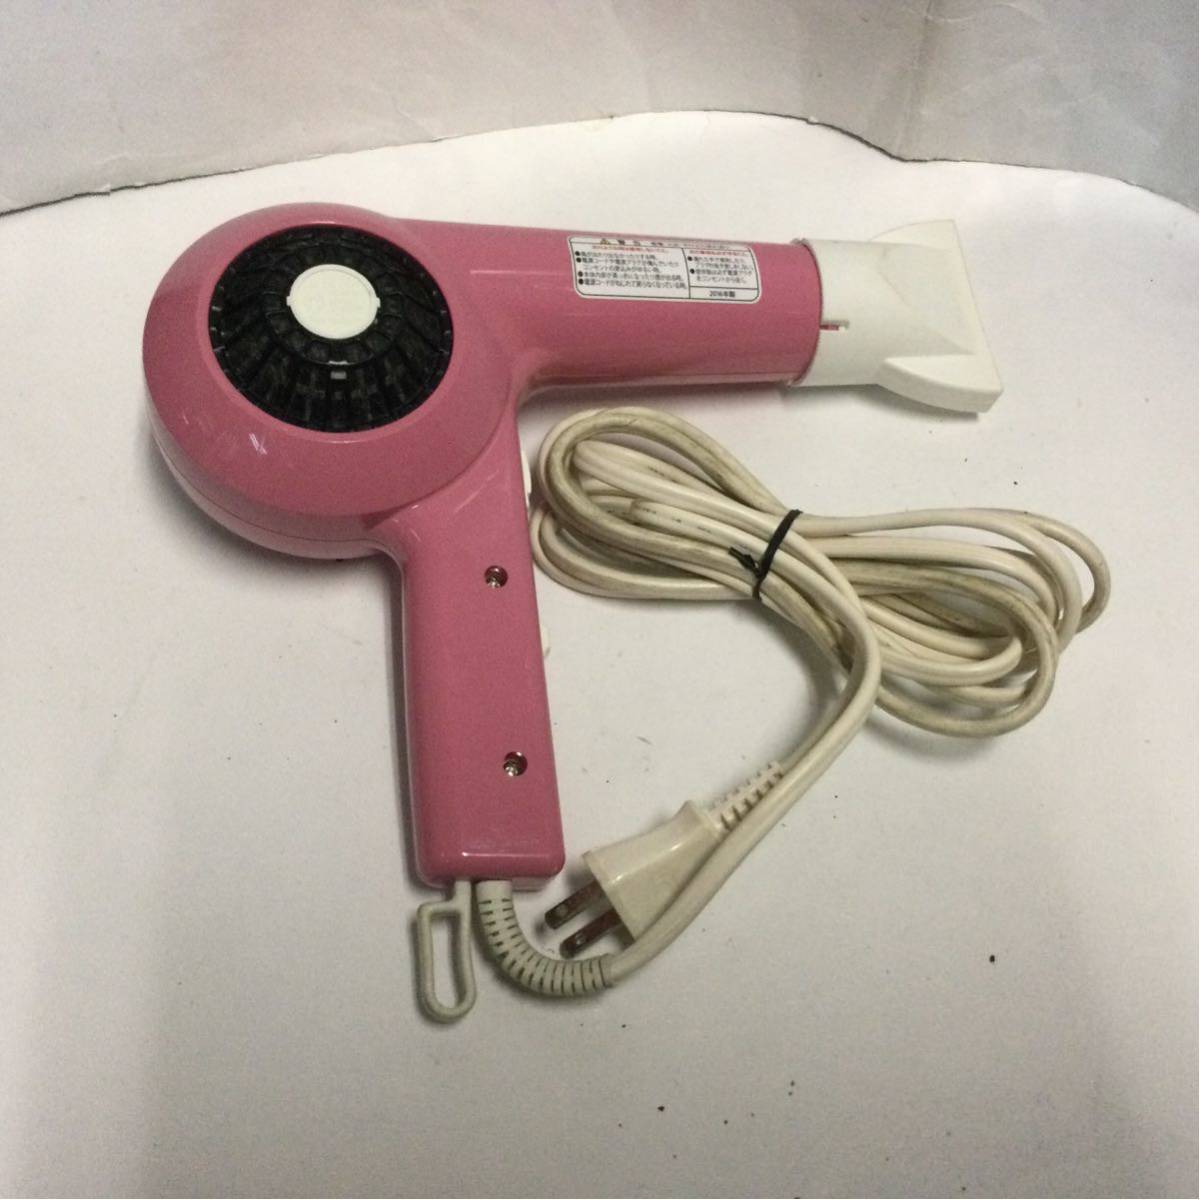 TESCOM hair dryer Nobby TNB1903 pink operation goods Tescom nobi.